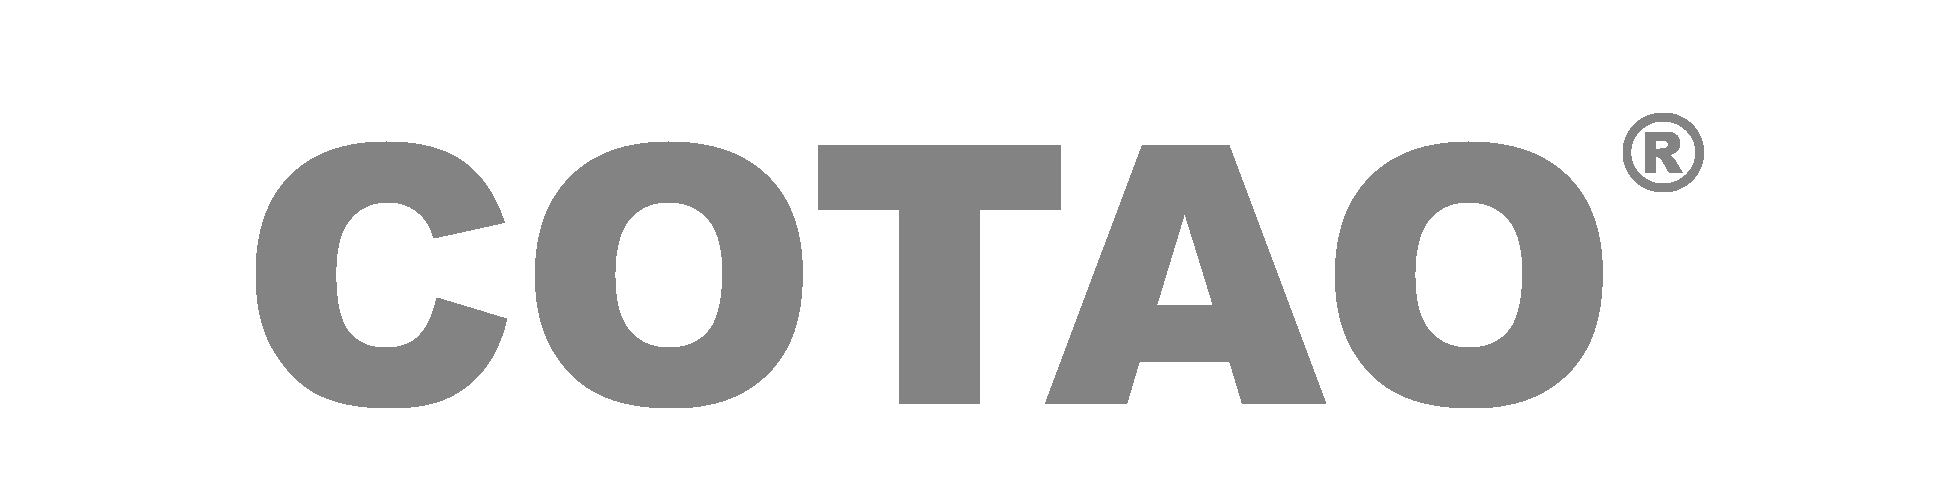 Cotao logo